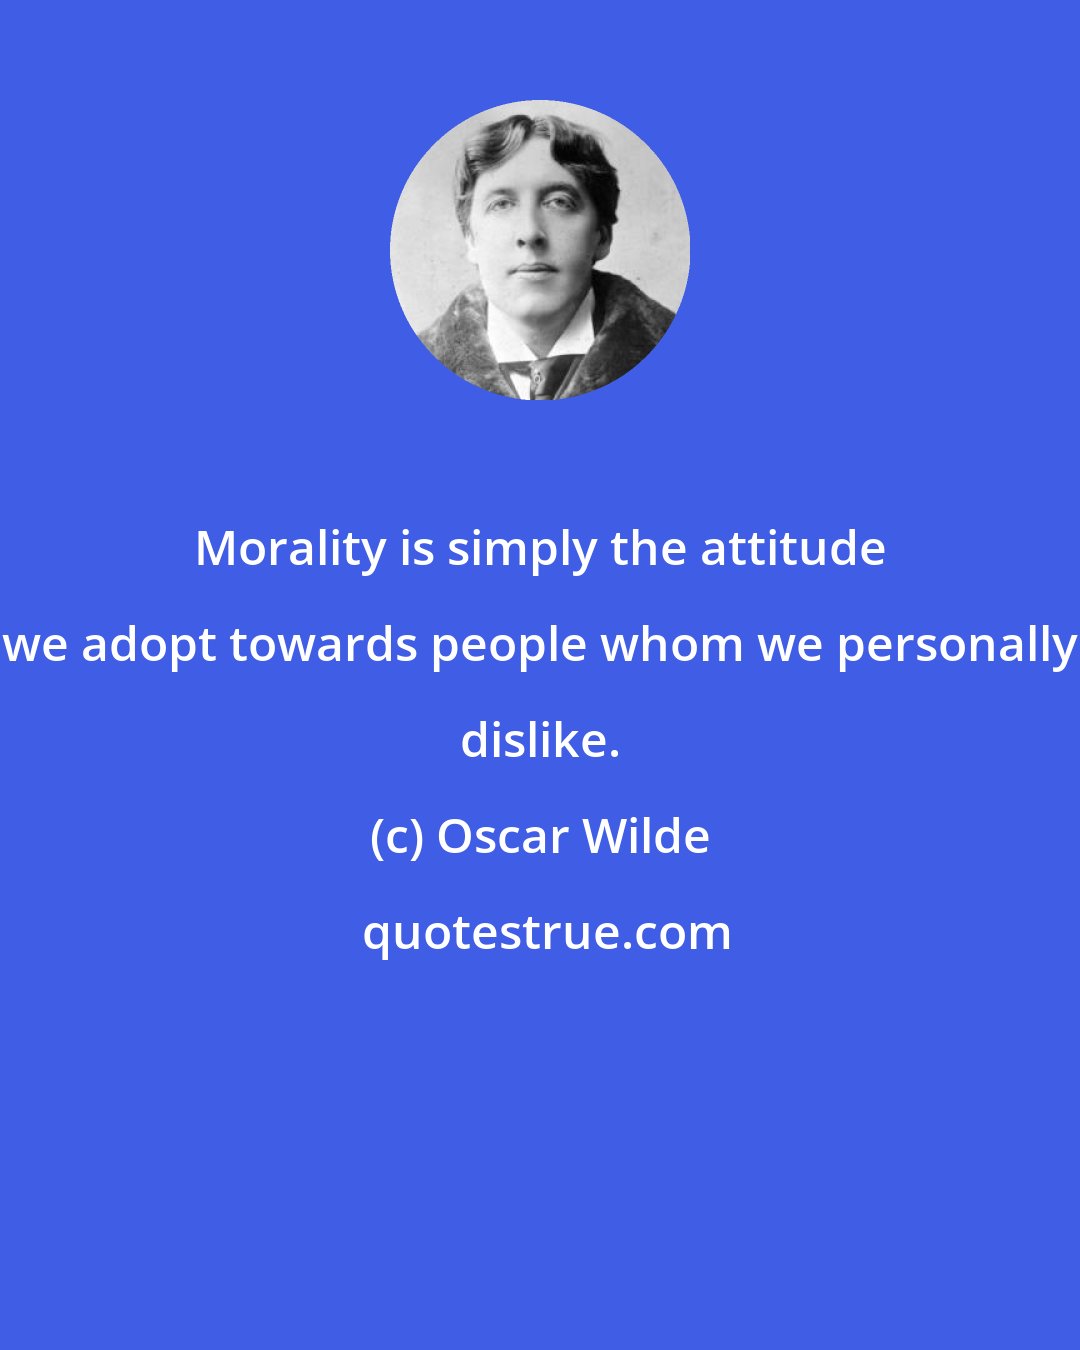 Oscar Wilde: Morality is simply the attitude we adopt towards people whom we personally dislike.